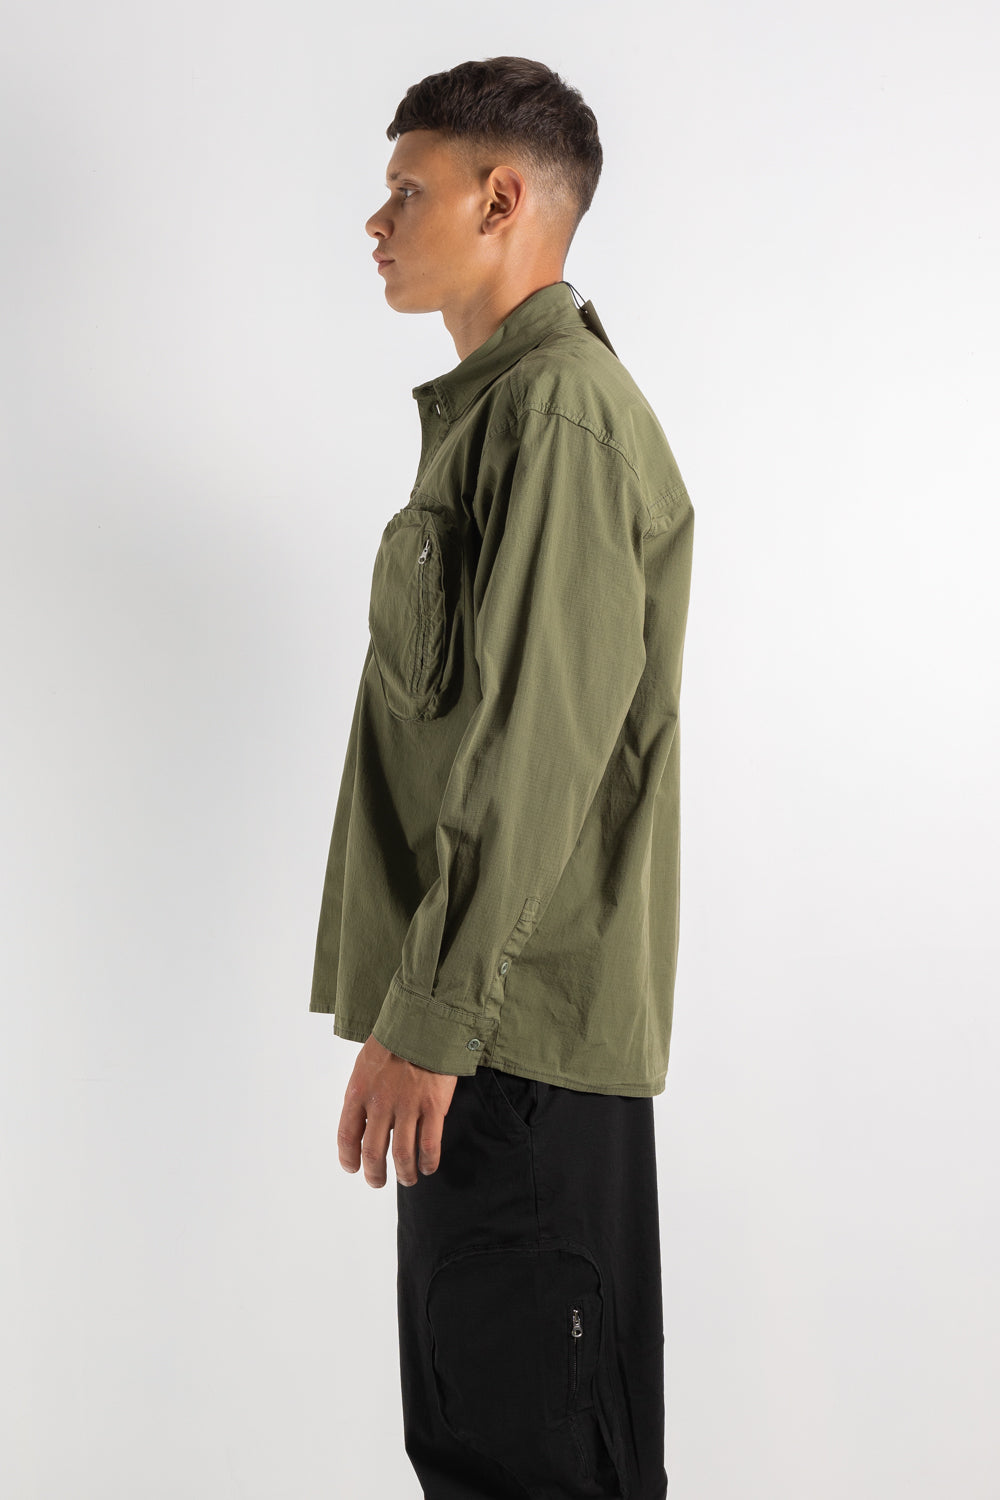 Mens Shirt | Henrik Vibskov Cargo Shirt Green | The Standard Store